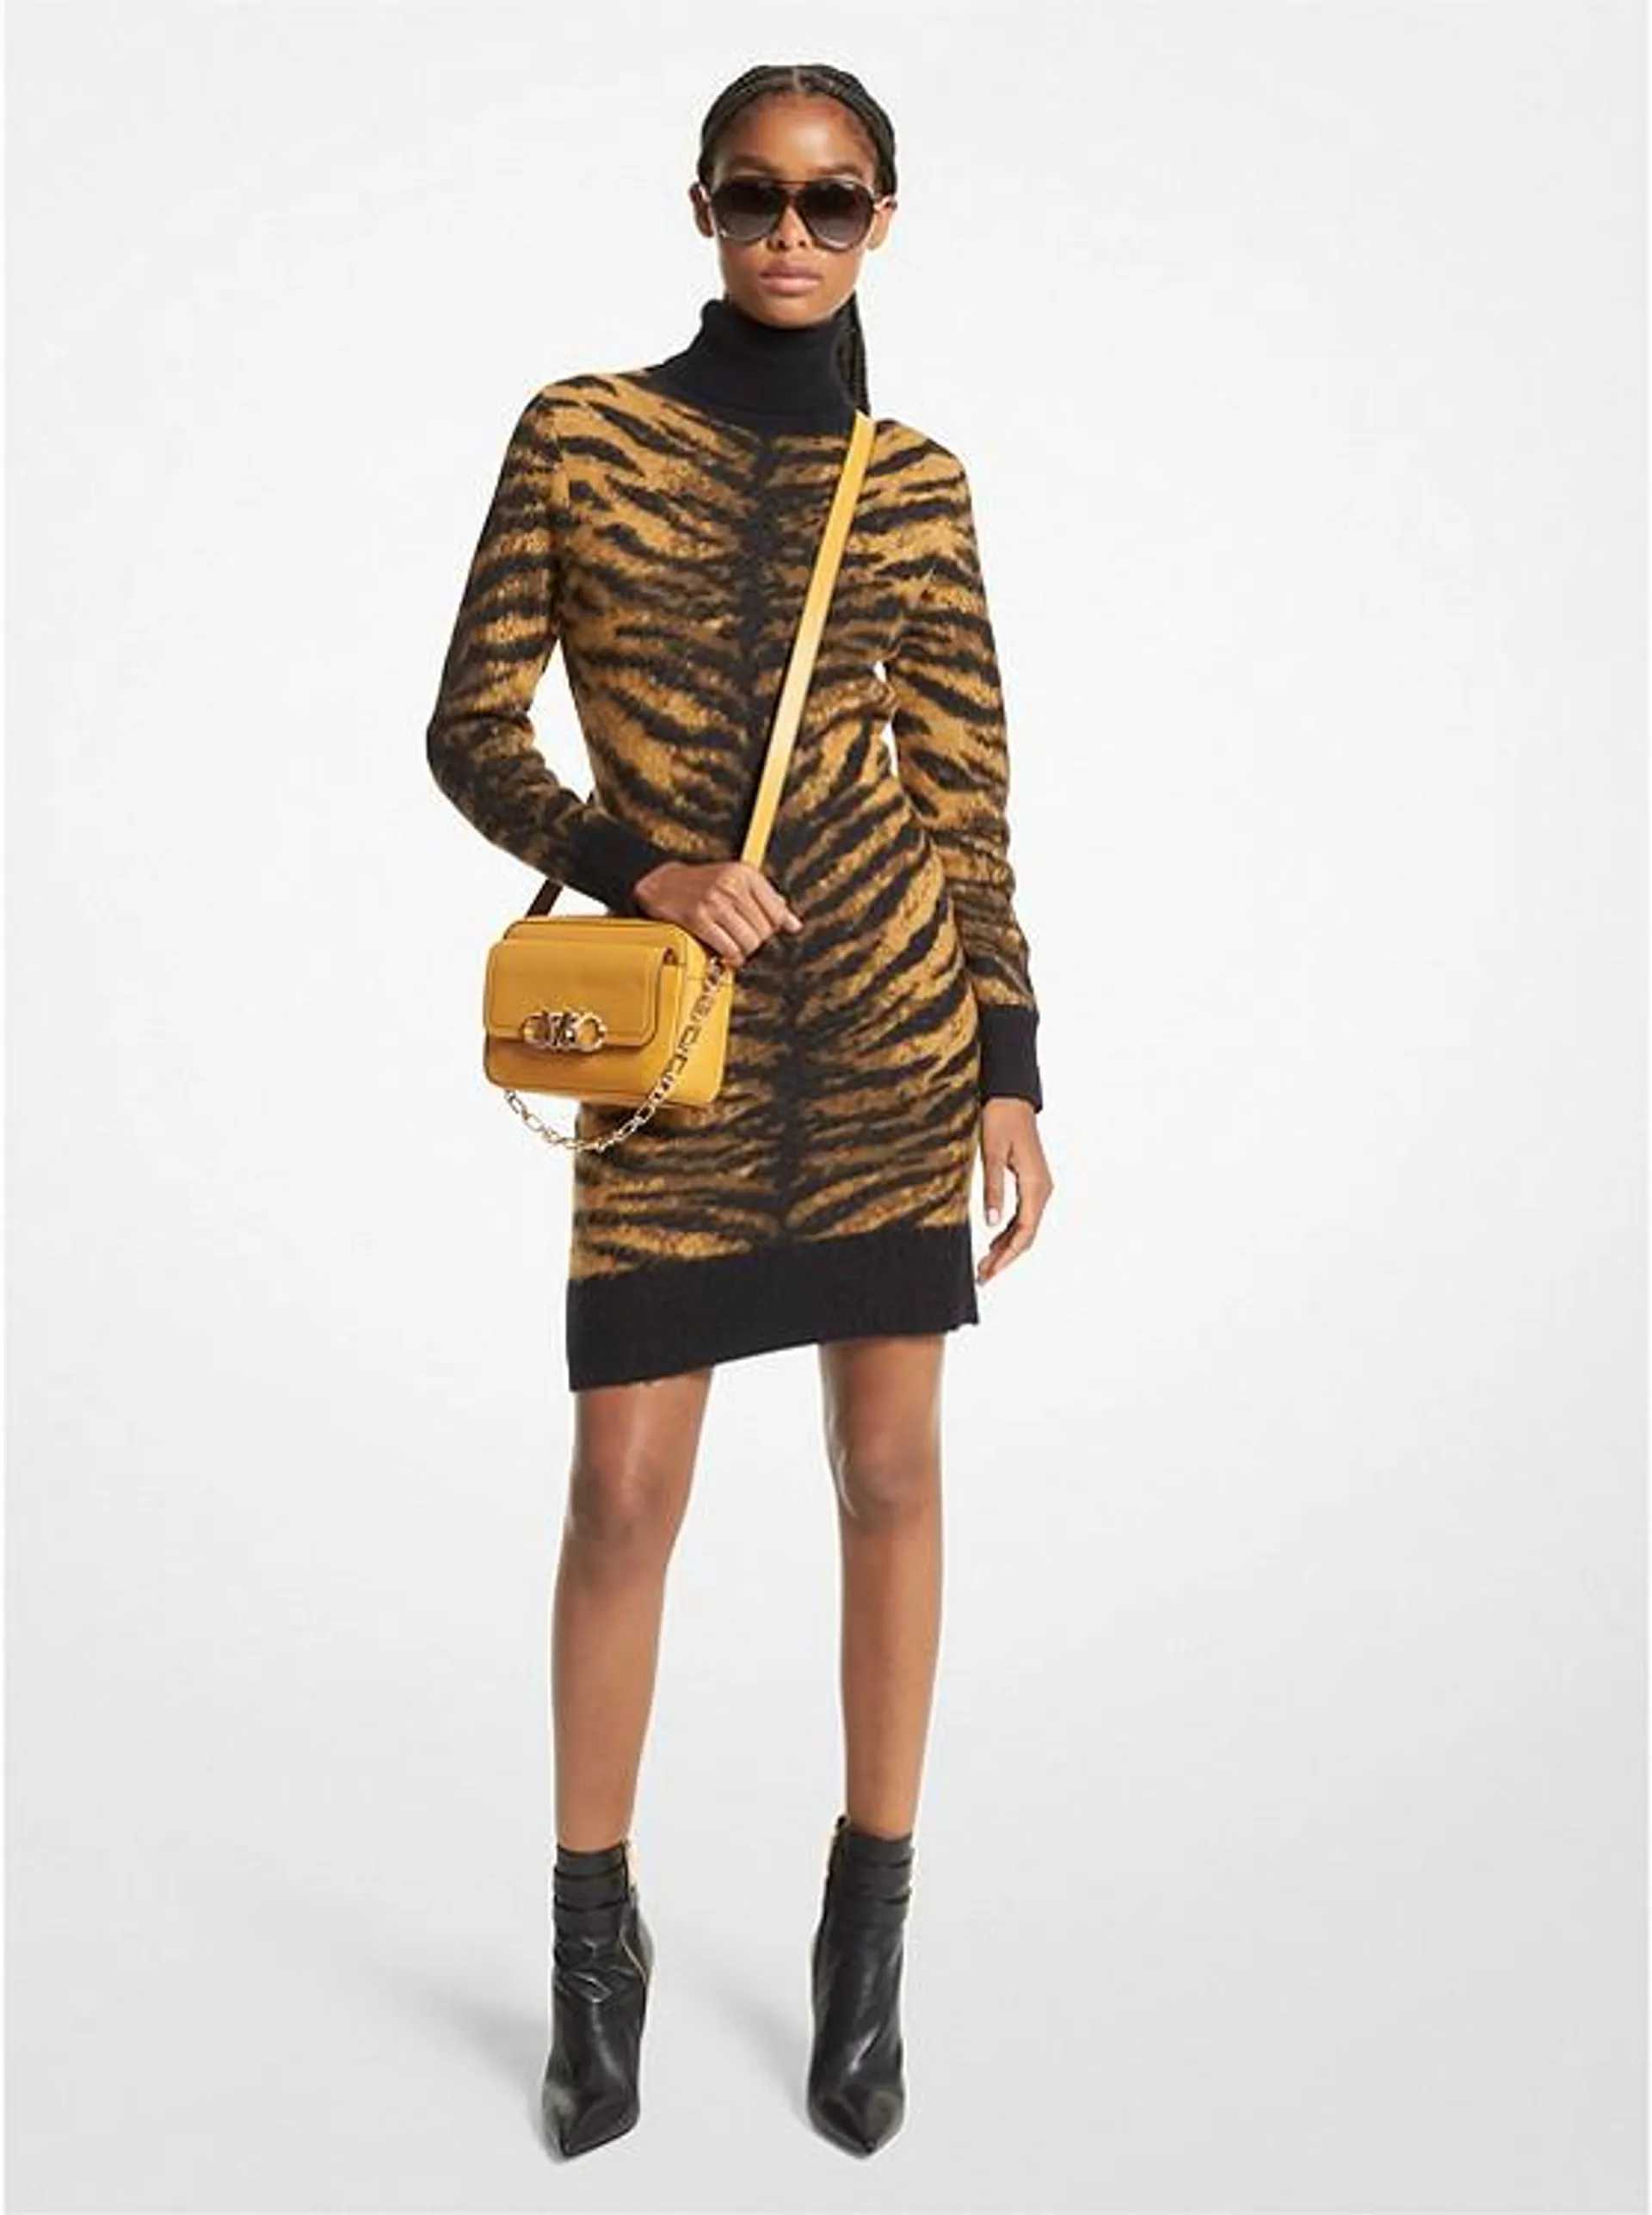 Brushed Tiger Jacquard Sweater Dress